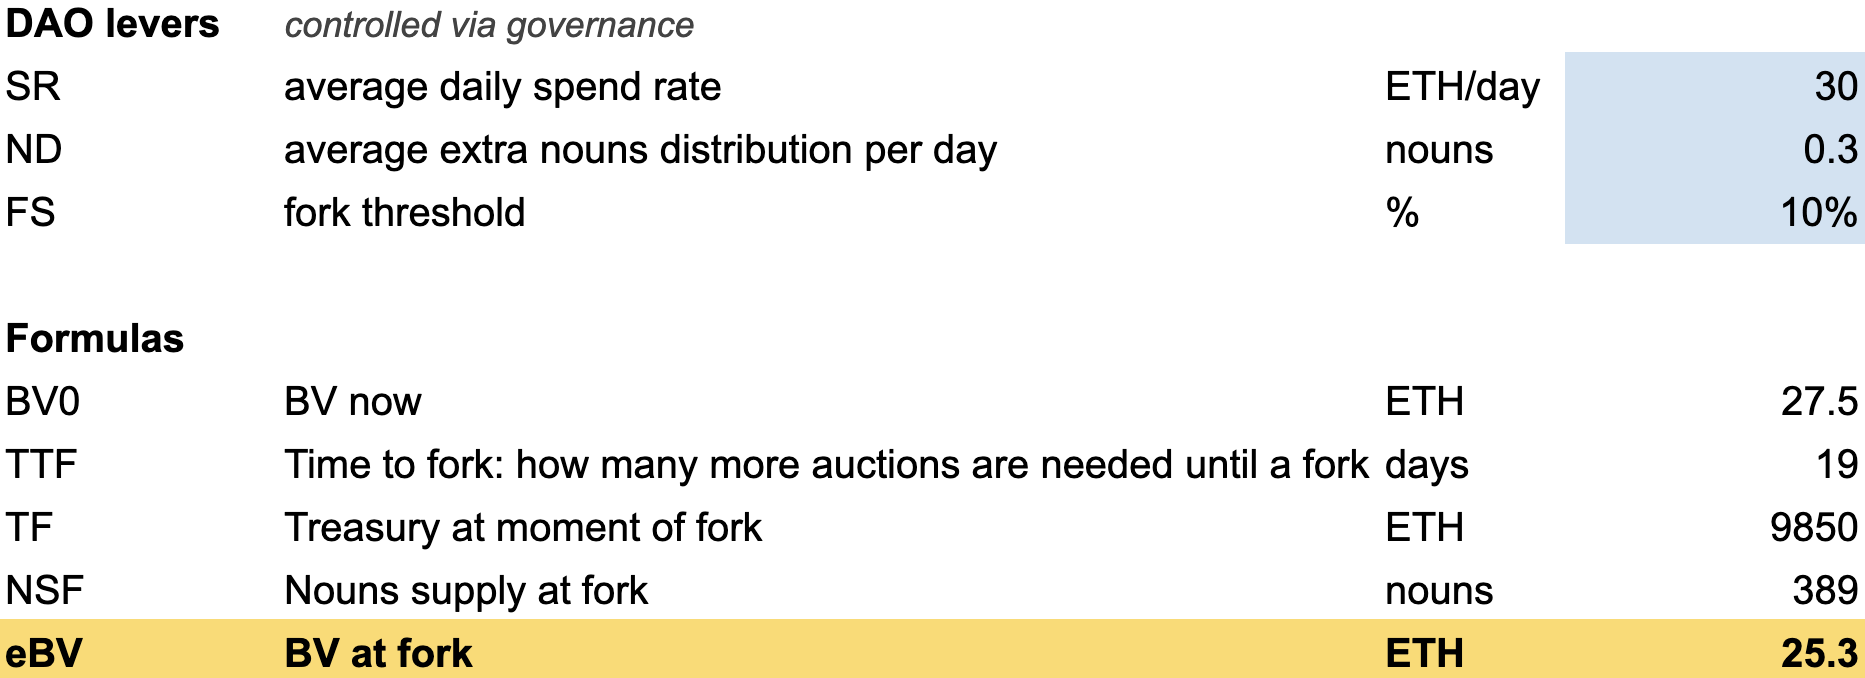 10% Fork Threshold, 0.3 nouns distribution per day